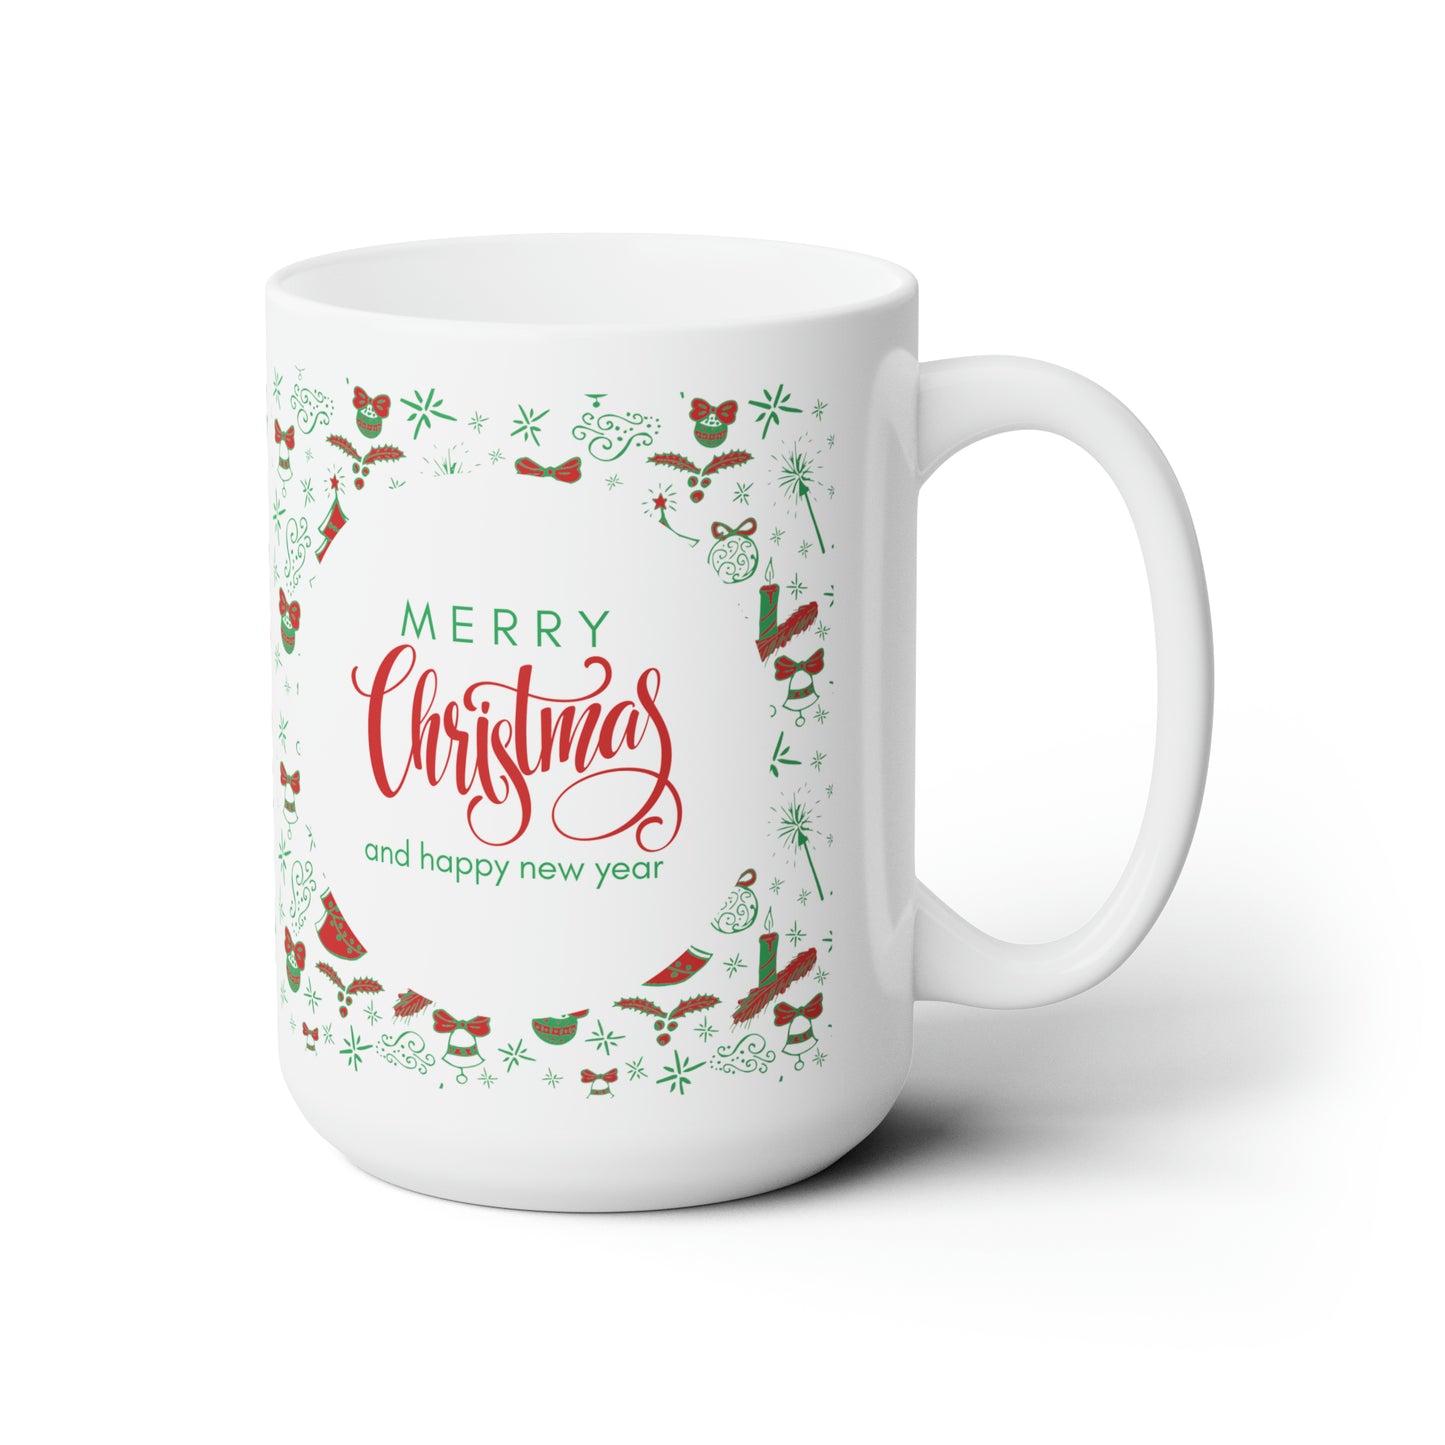 Merry Christmas and Happy New year Ceramic Mugs, 15oz